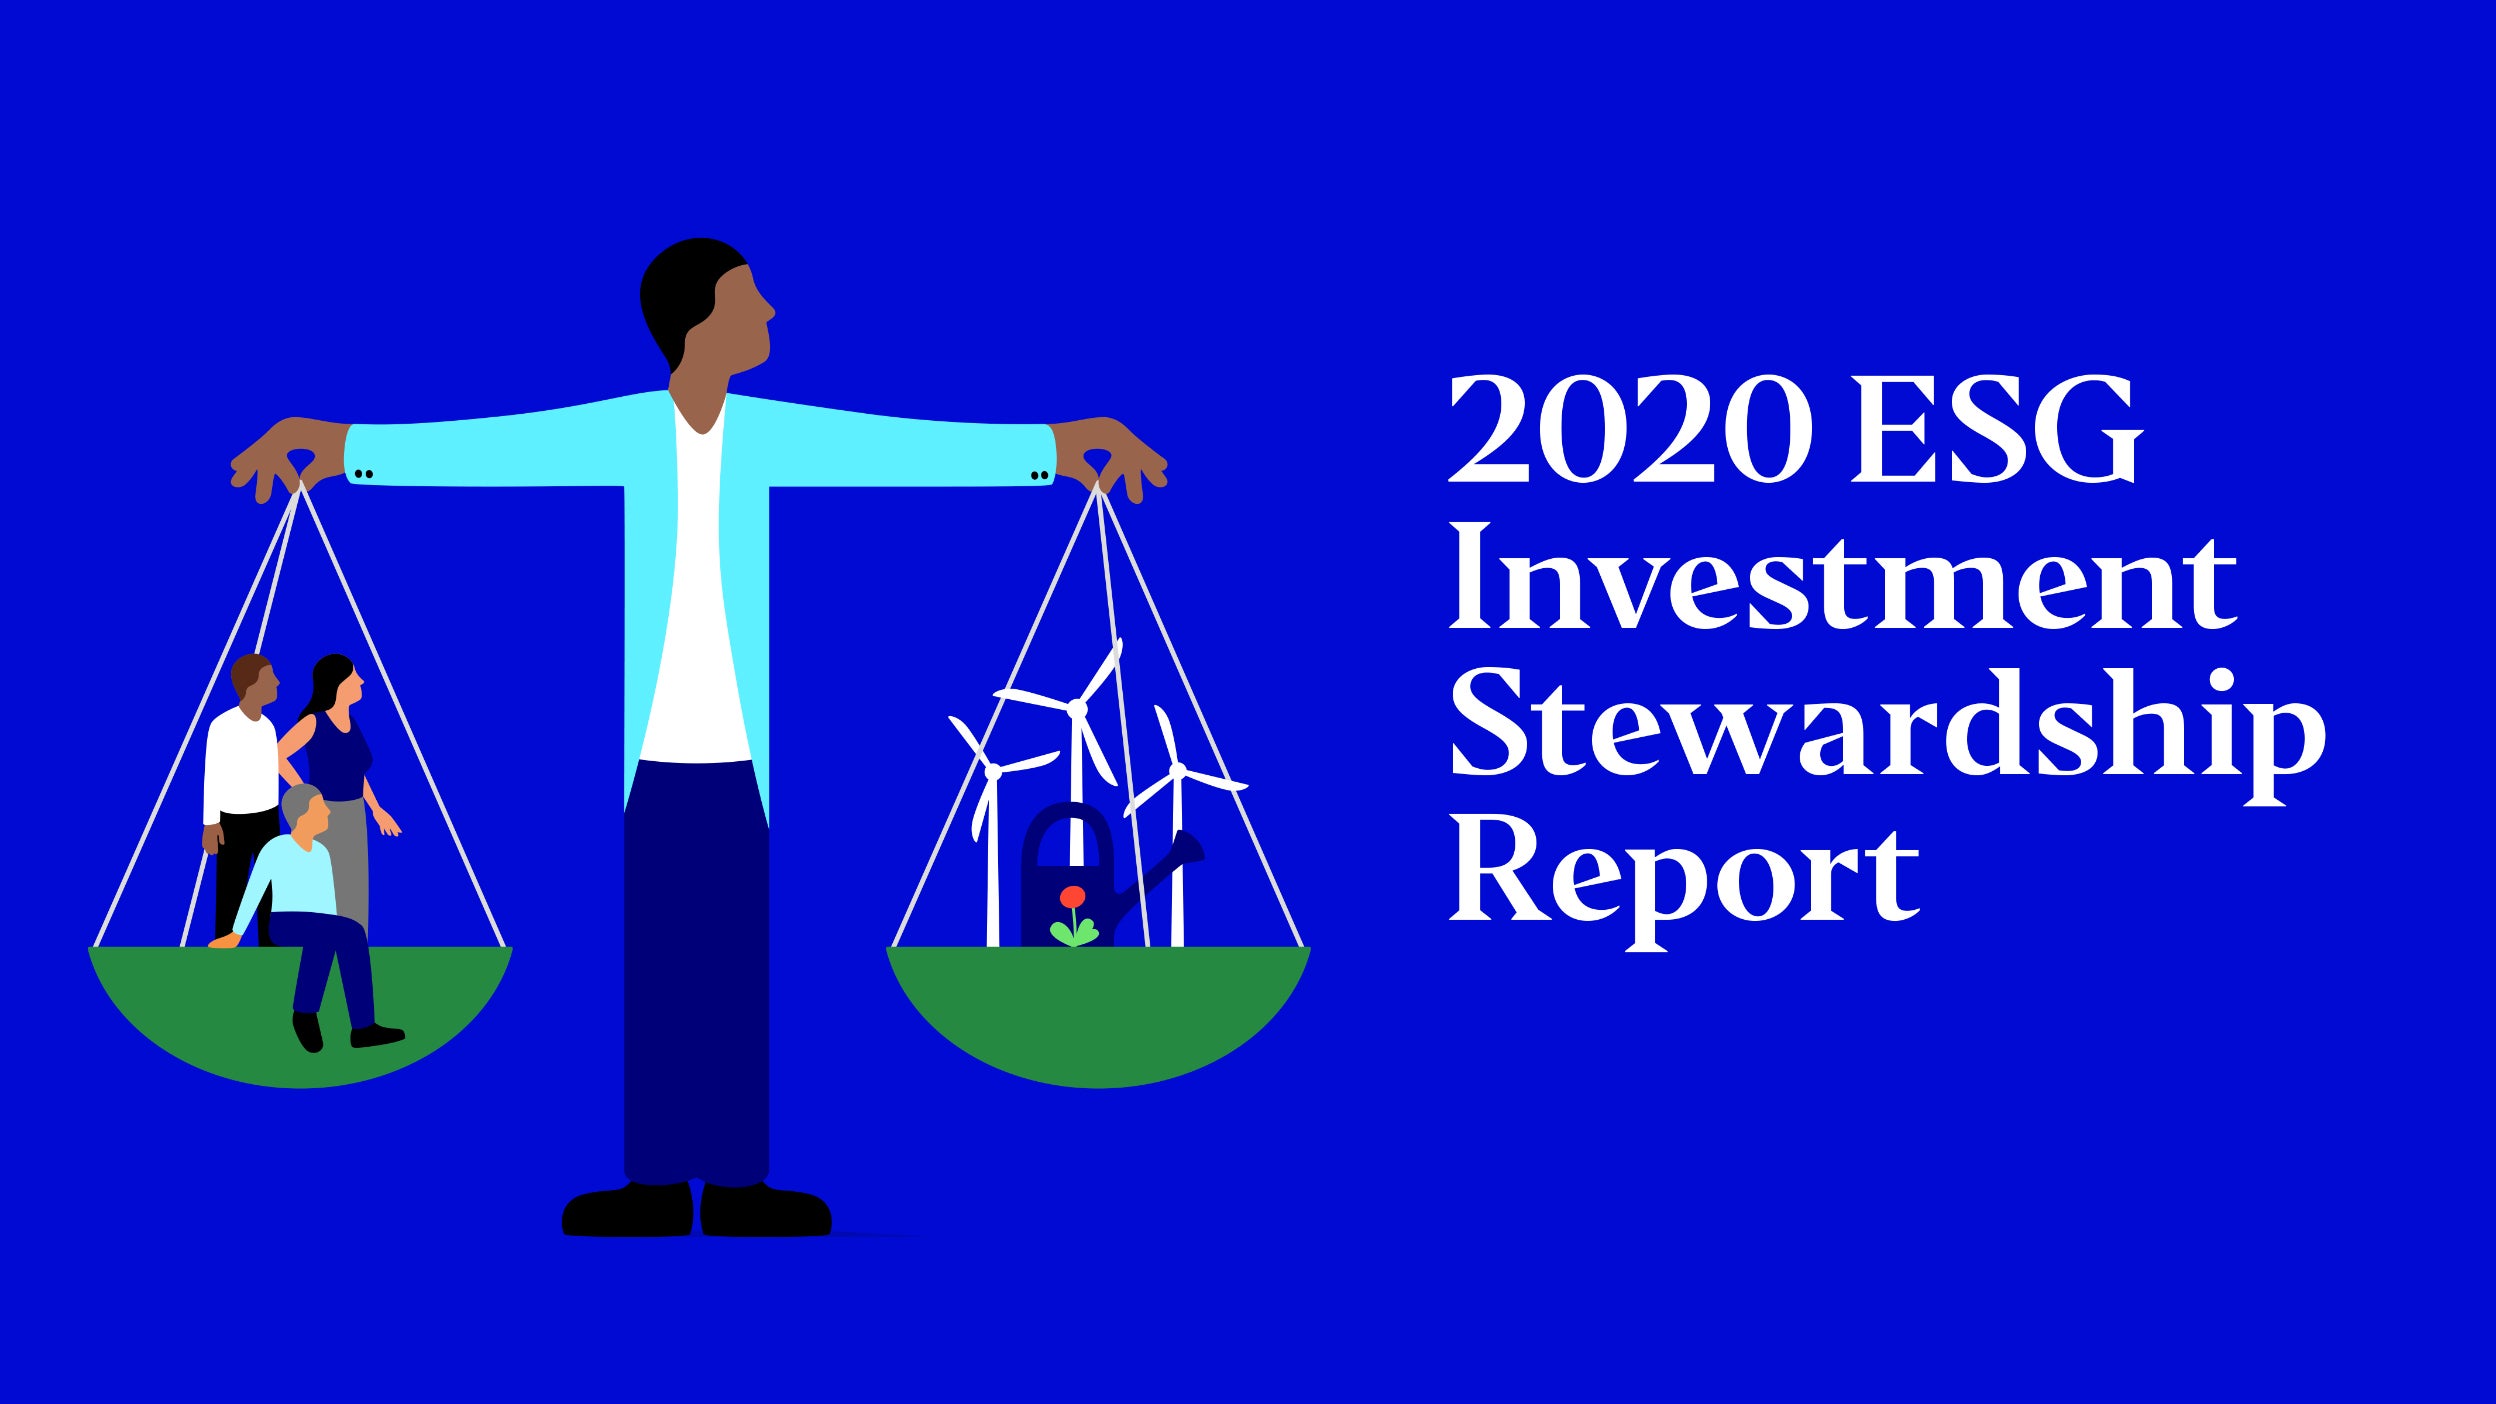 Invesco Investment Stewardship annual report 2020